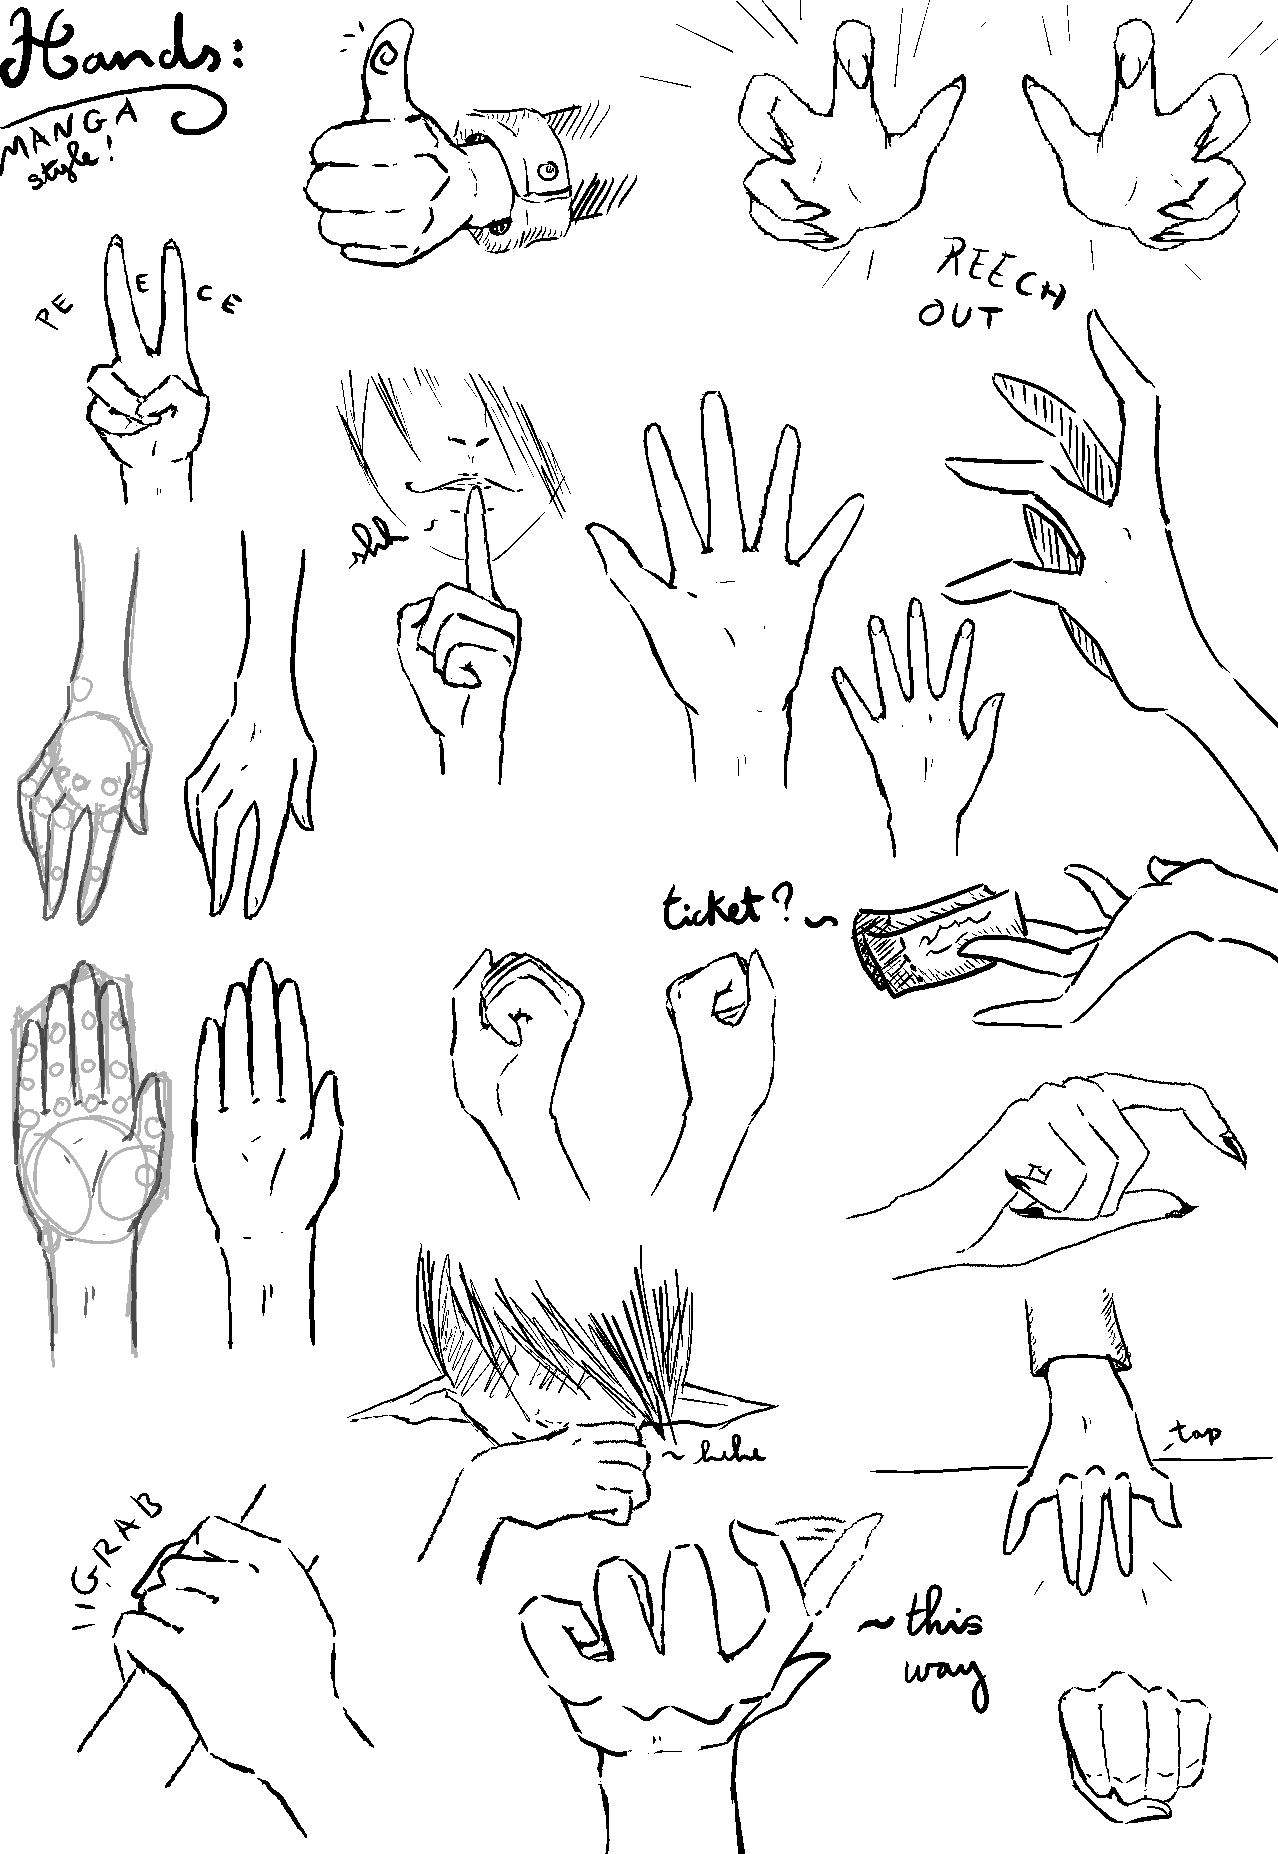 Manga hand practice 1 by VitaminEmo on DeviantArt